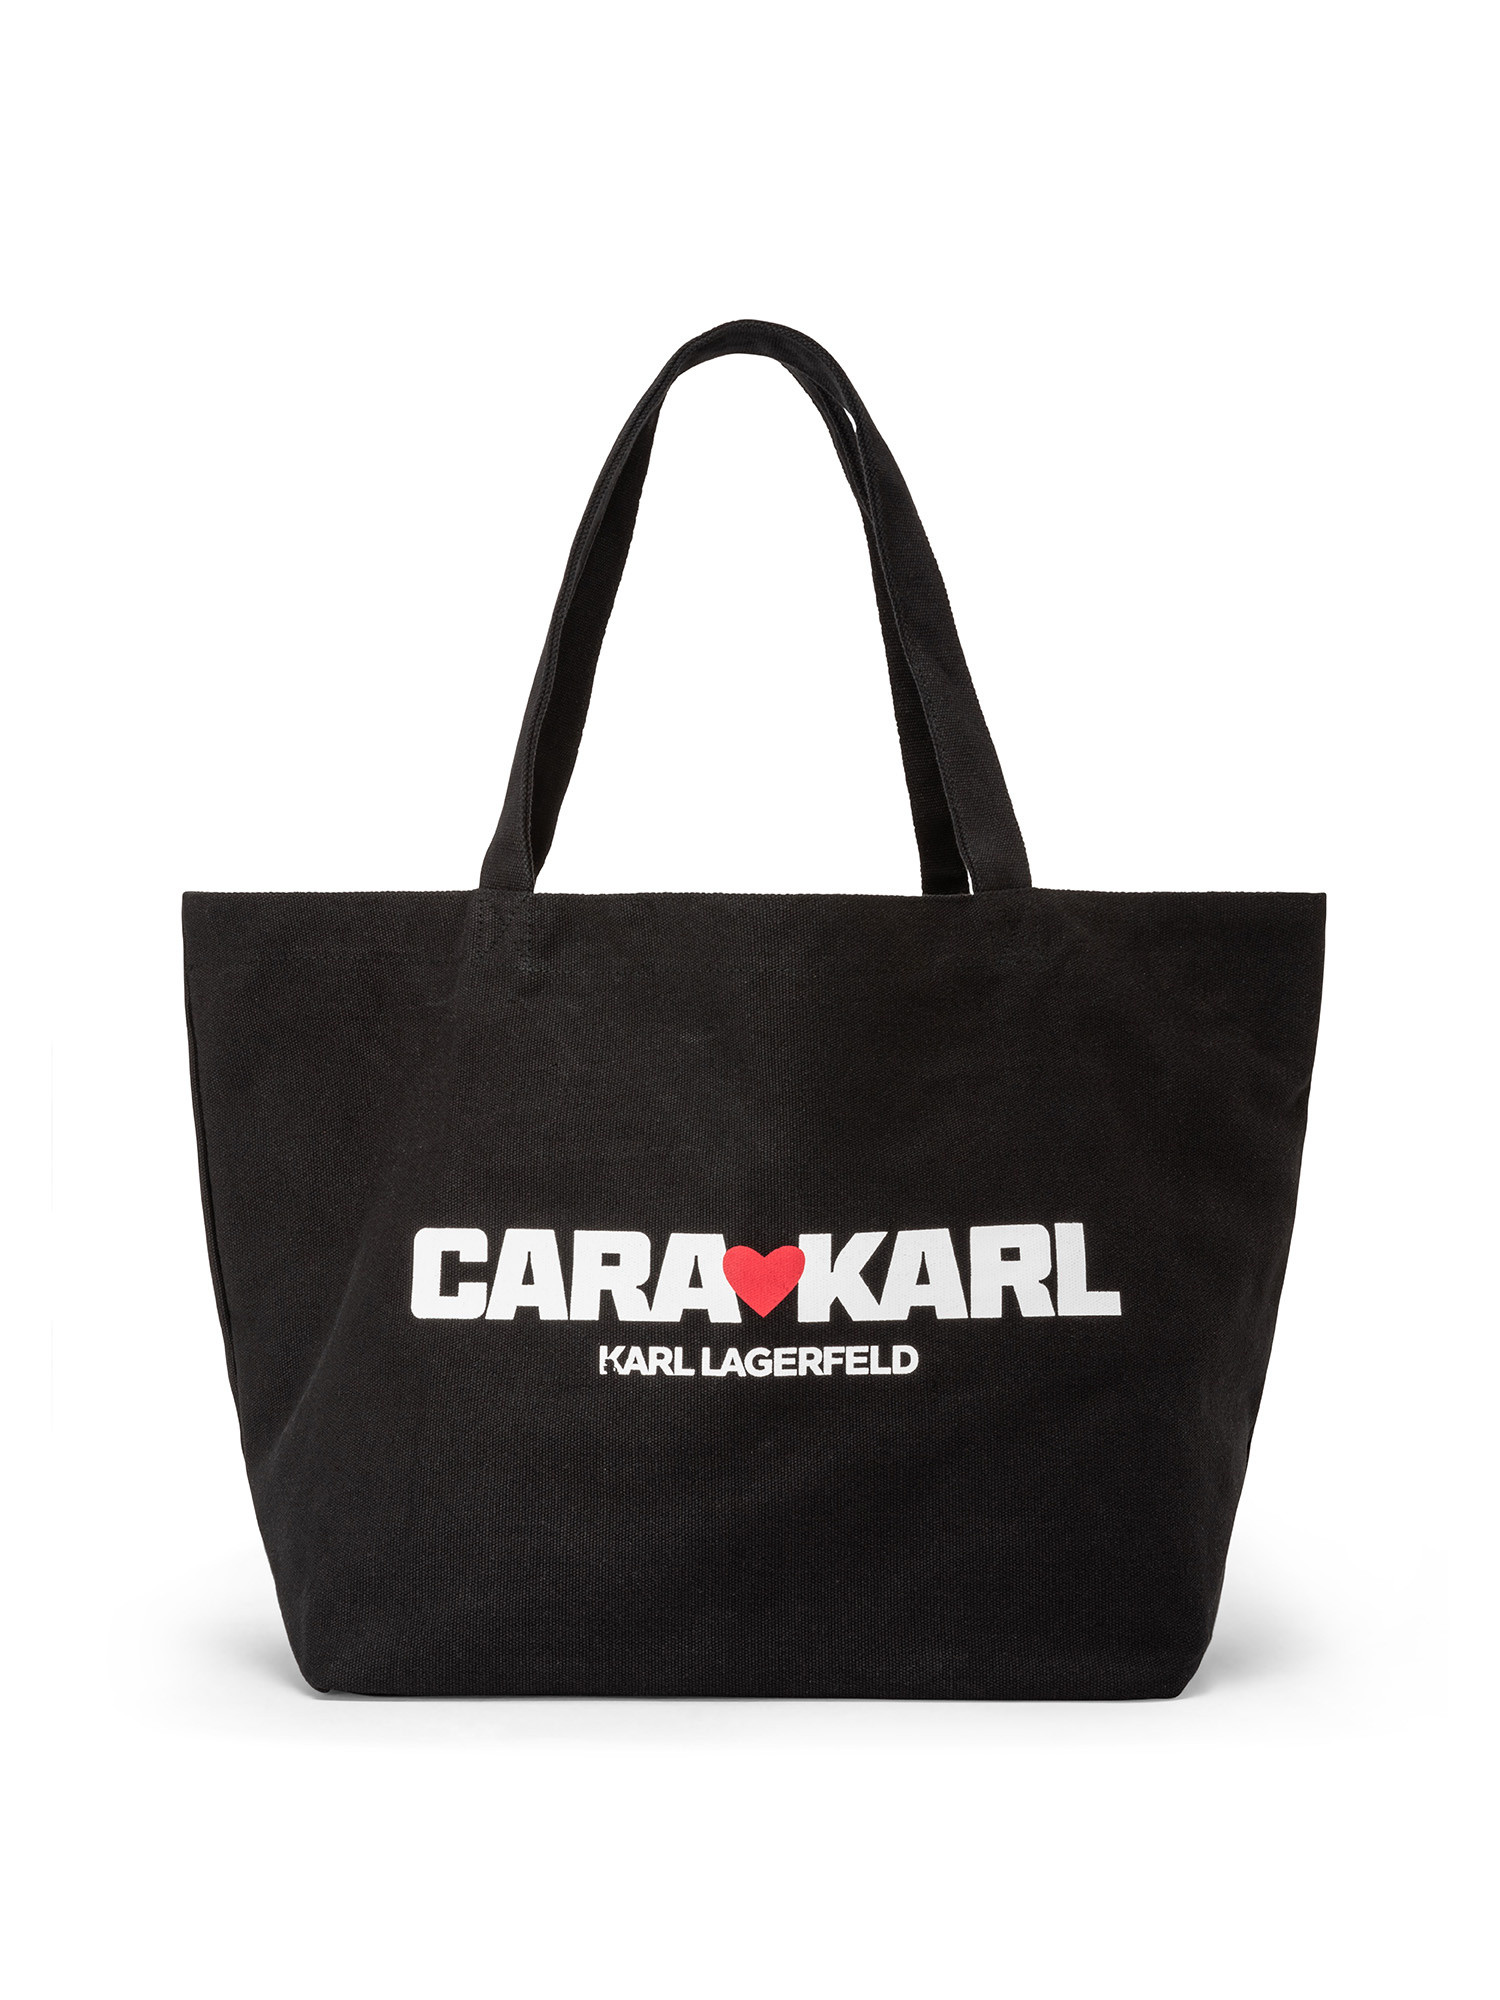 Karl Lagerfeld - Cara loves karl shopper in tela, Nero, large image number 0